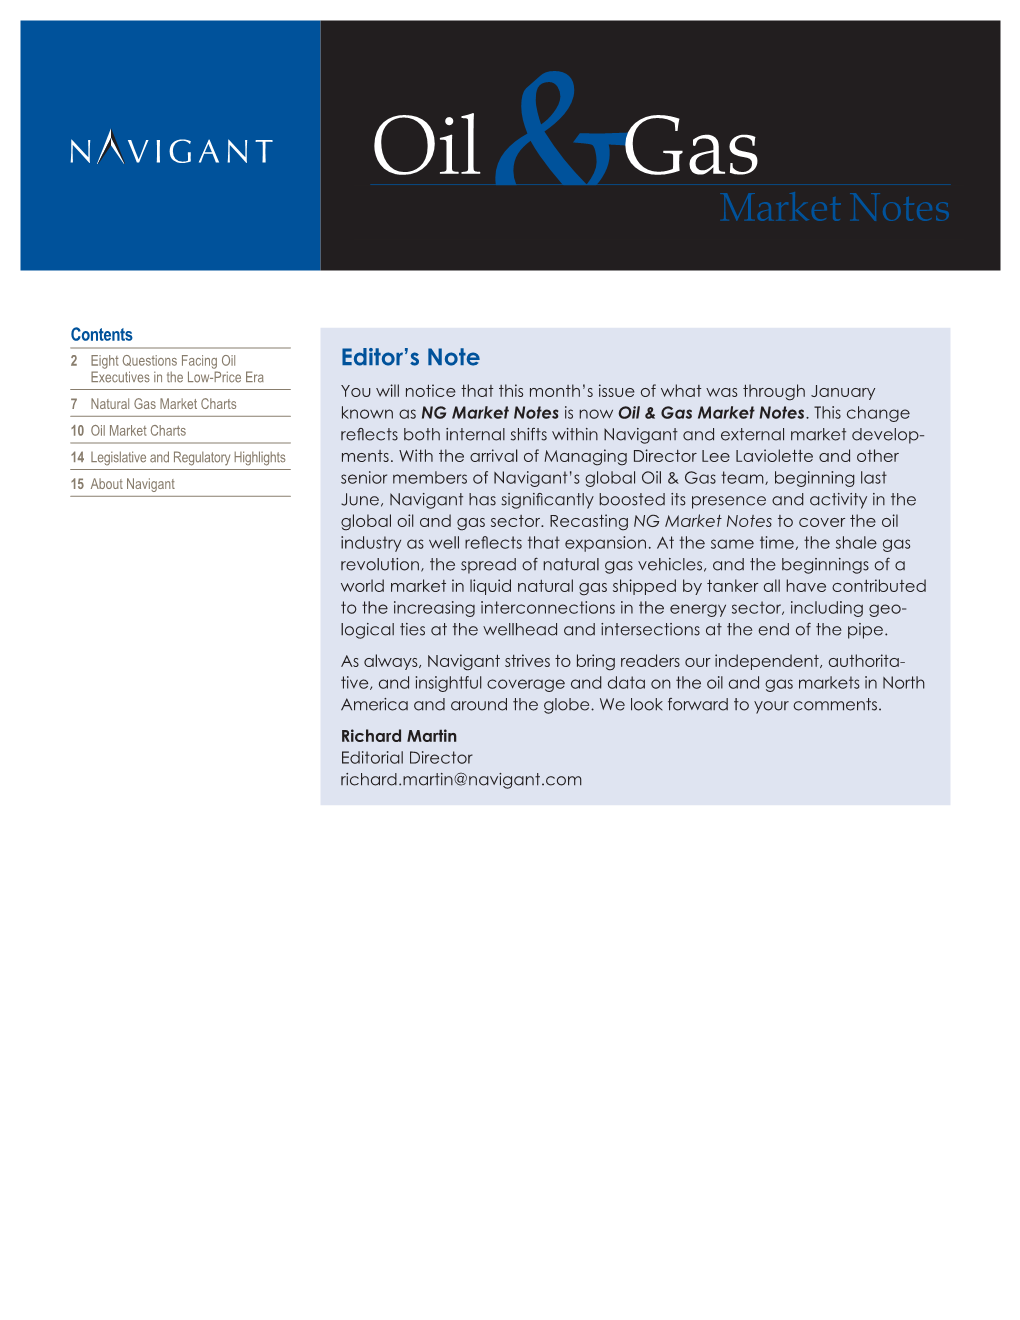 Oil Gas Market Notes